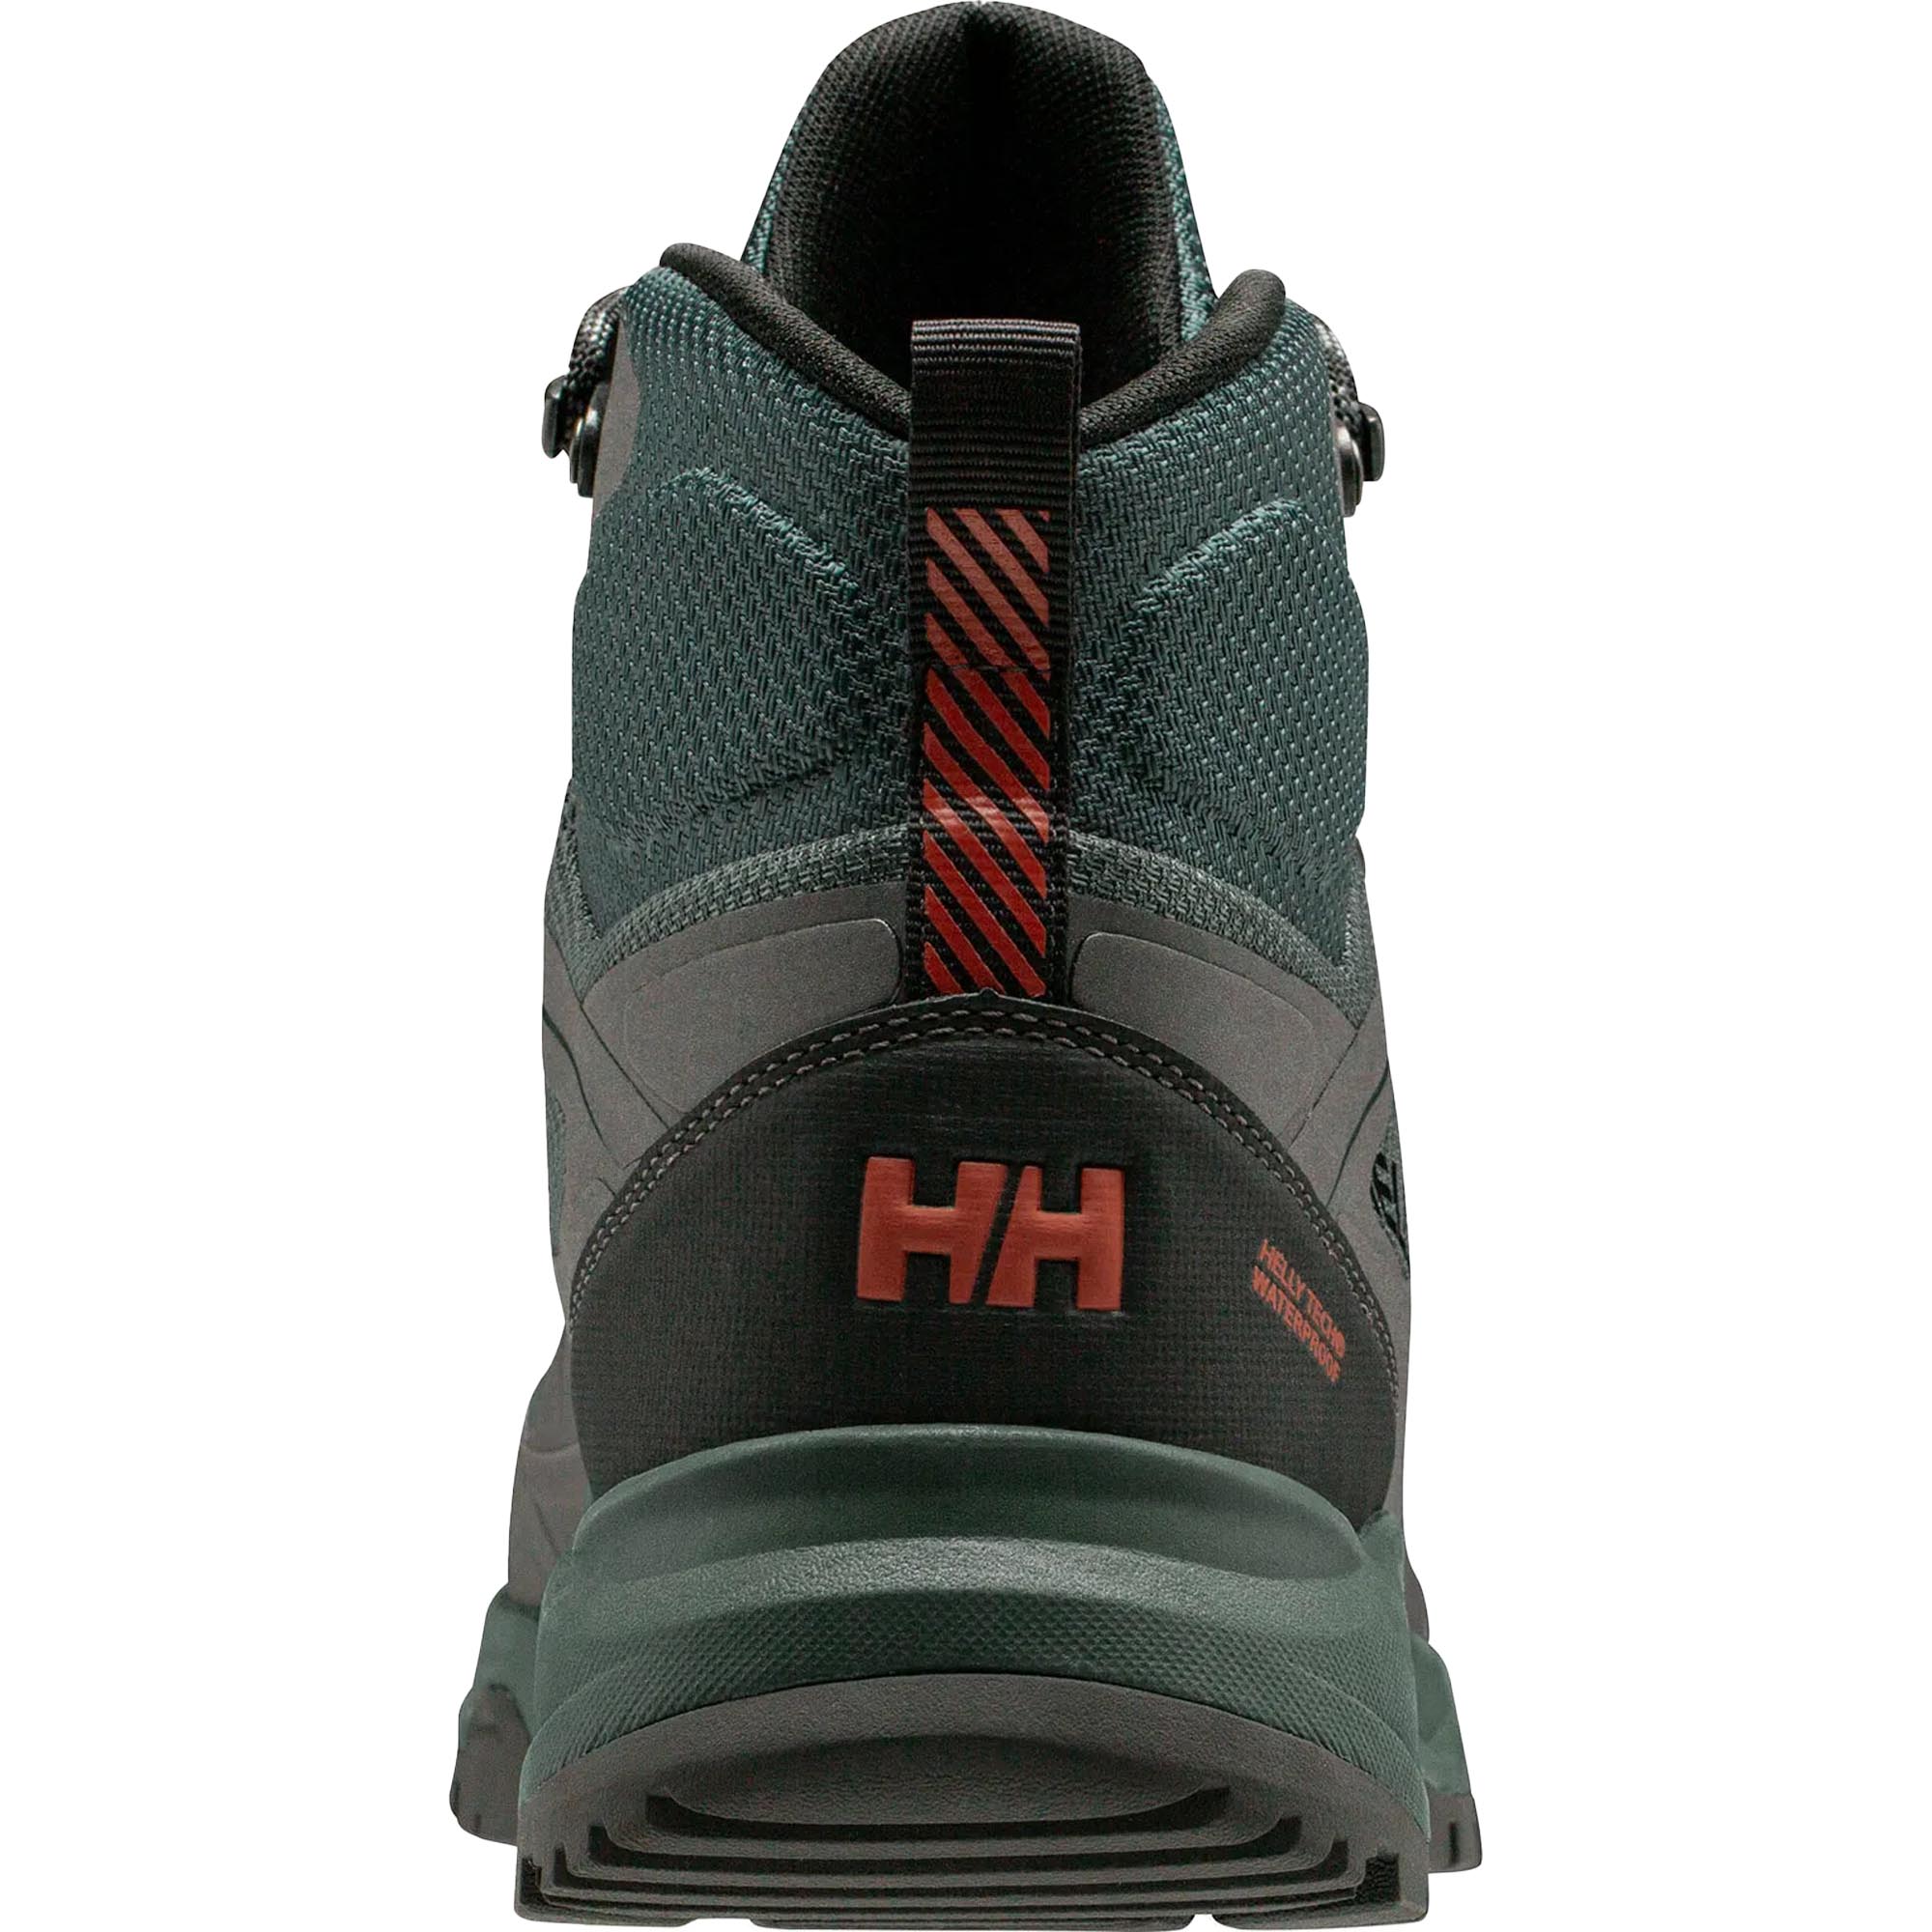 Helly Hansen Cascade Mid HT Men's WP Hiking Boots